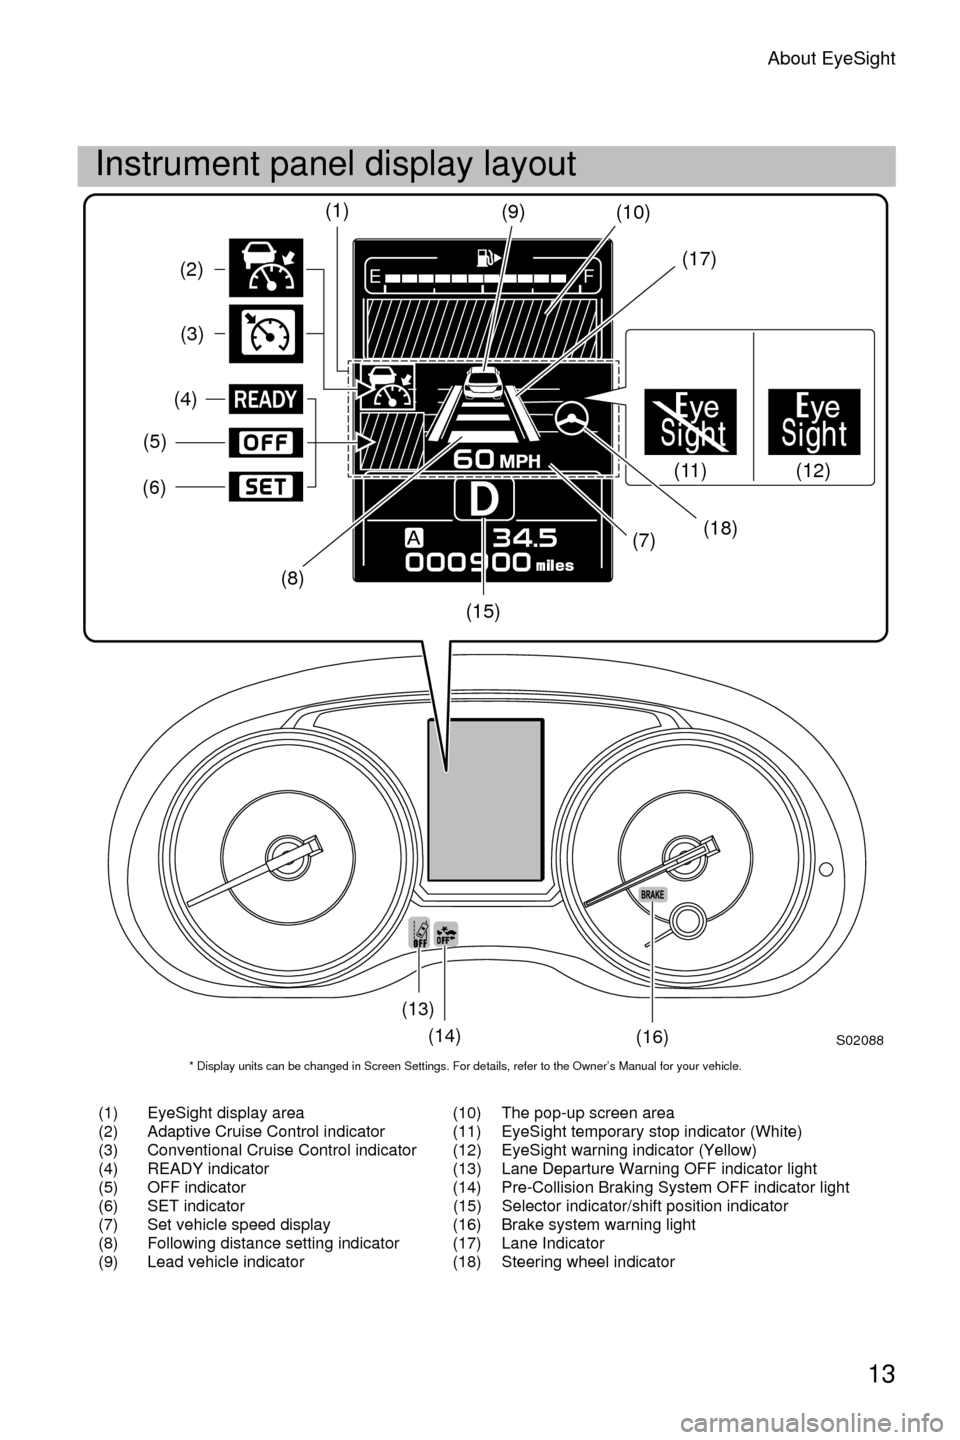 SUBARU CROSSTREK 2016 1.G Driving Assist Manual About EyeSight
13
Instrument panel display layout
(1) EyeSight display area(10) The pop-up screen area
(2) Adaptive Cruise Control indicator (11) EyeSight temporary stop indicator (White)
(3) Conventi